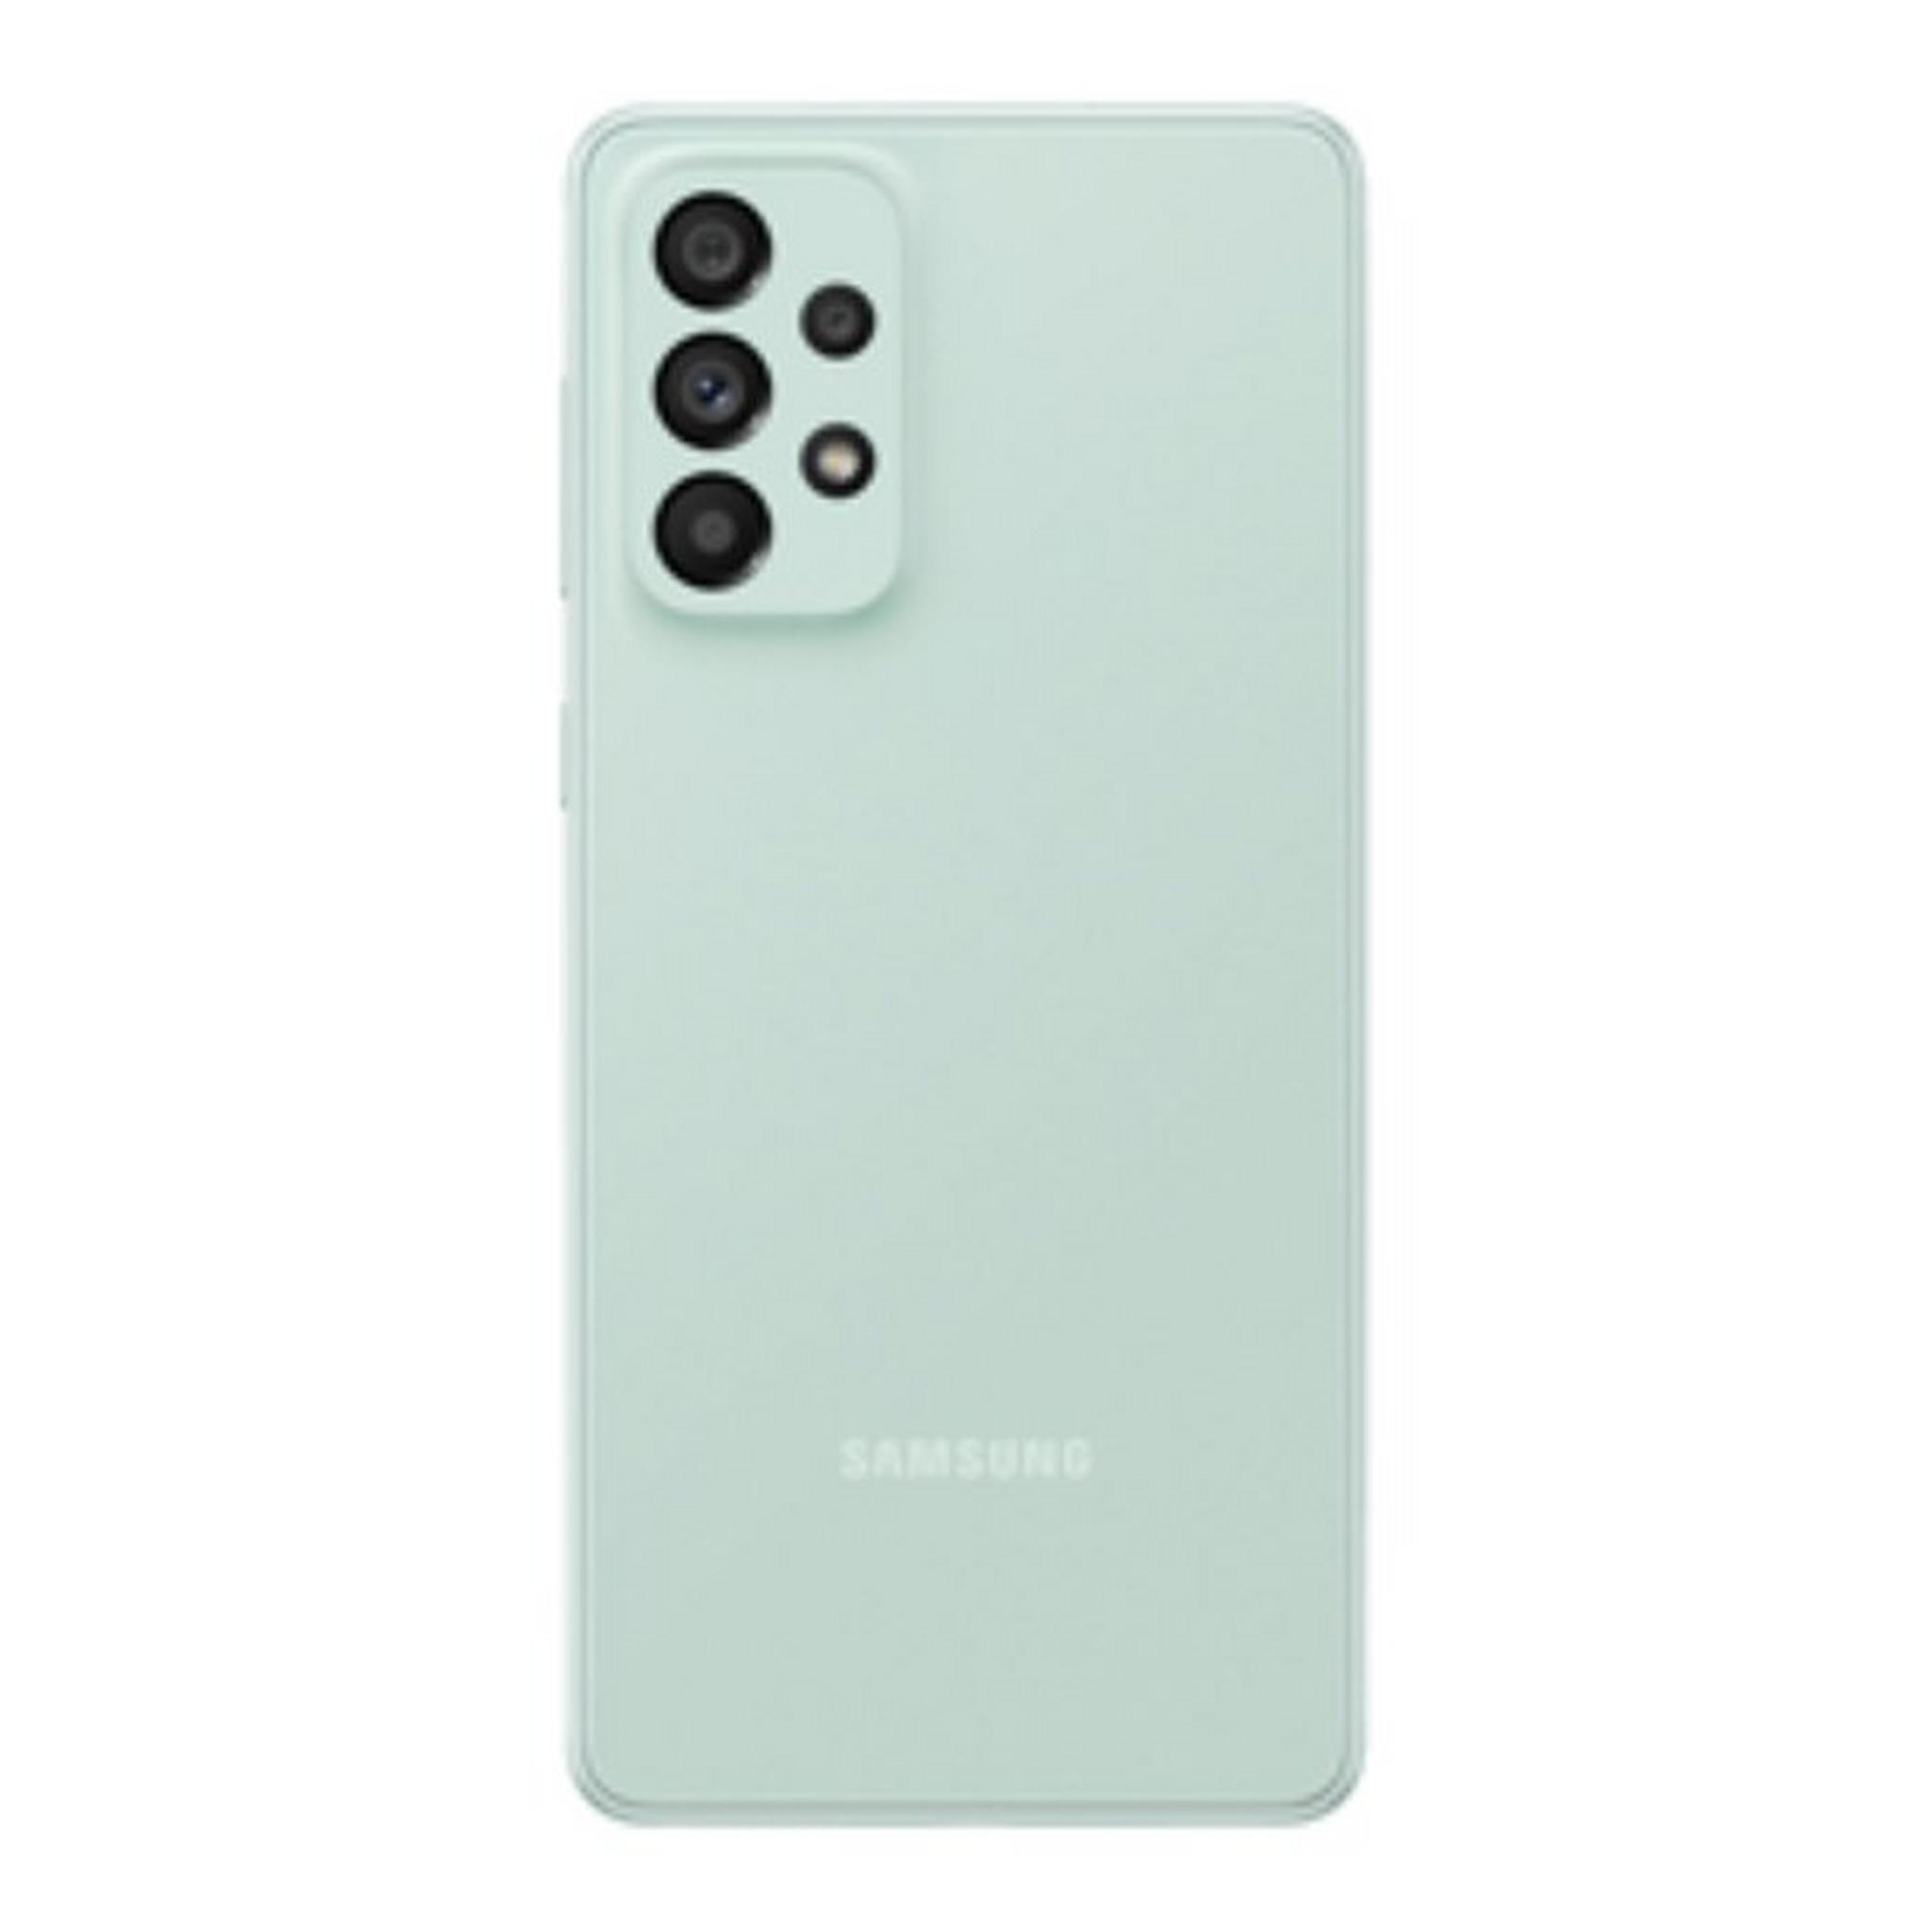 Samsung Galaxy A73 128GB 5G Phone - Awesome Mint